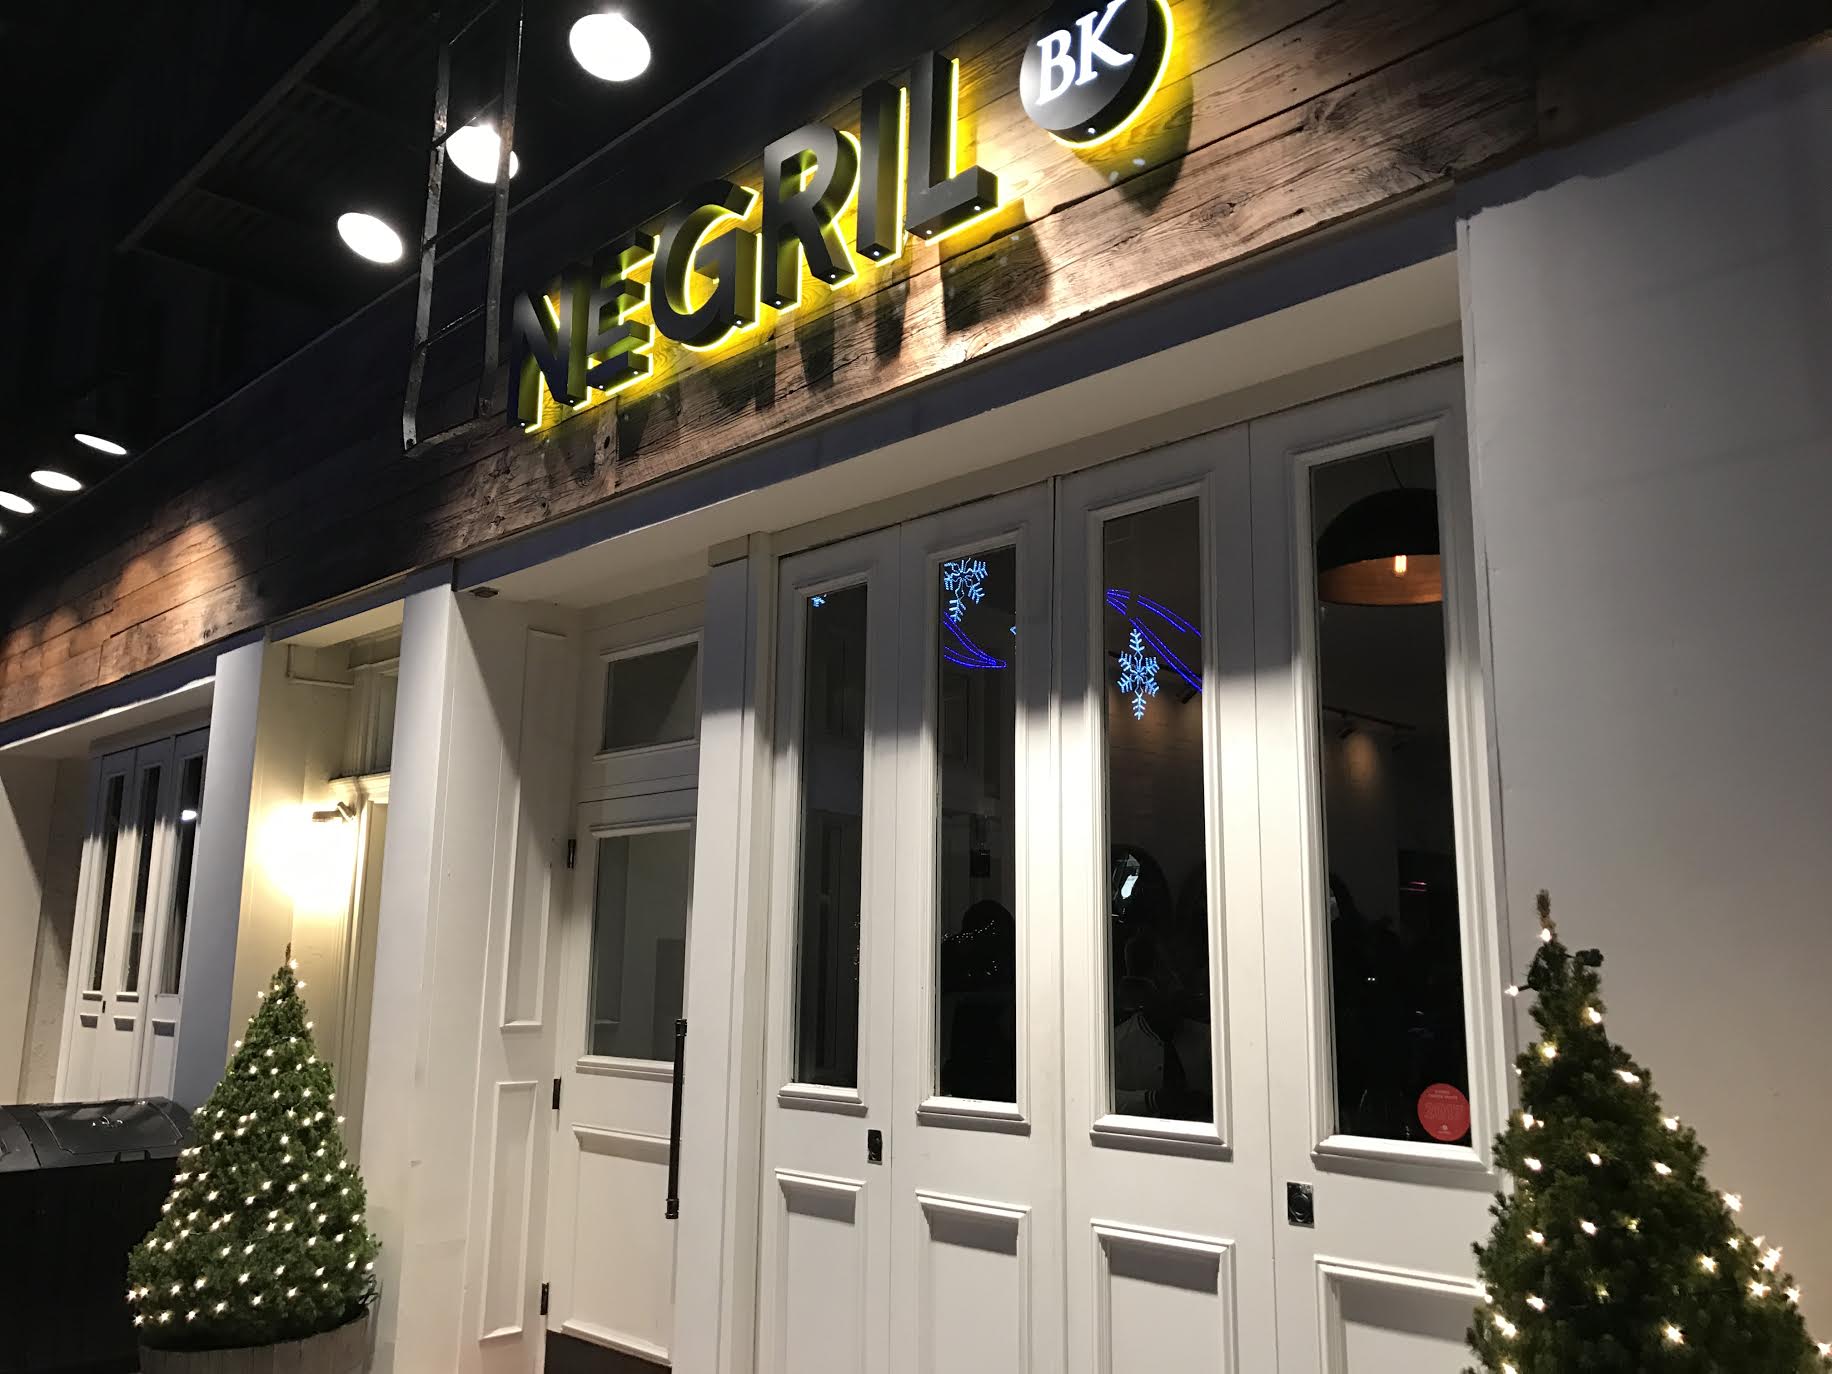 Caribbean Hotspot Negril BK Opens in Park Slope